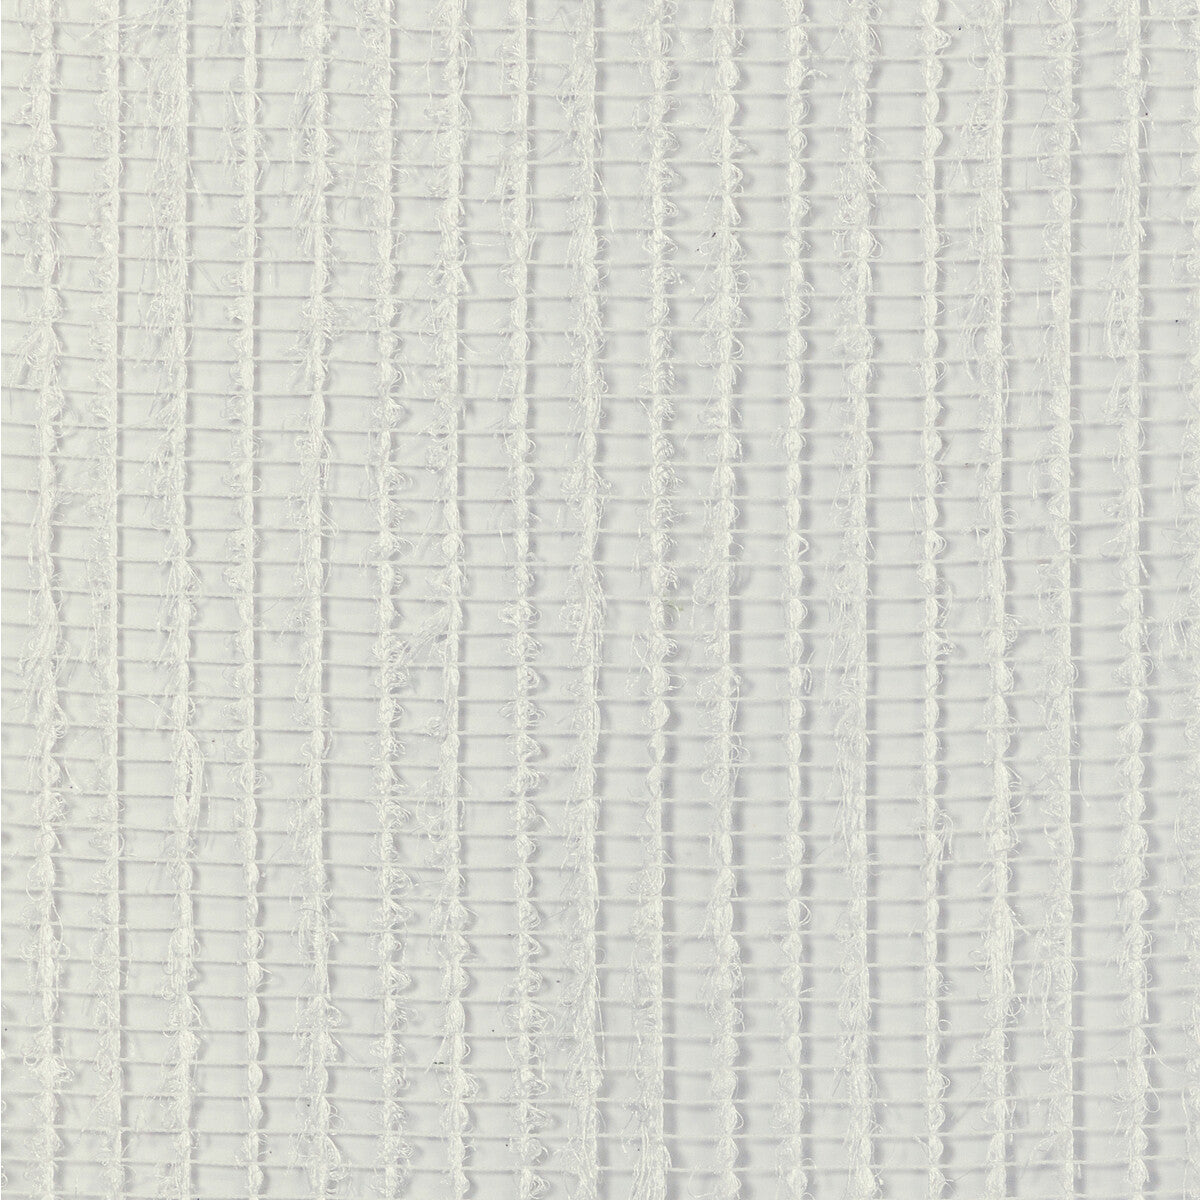 Kravet Basics fabric in 4856-101 color - pattern 4856.101.0 - by Kravet Basics in the Gis collection